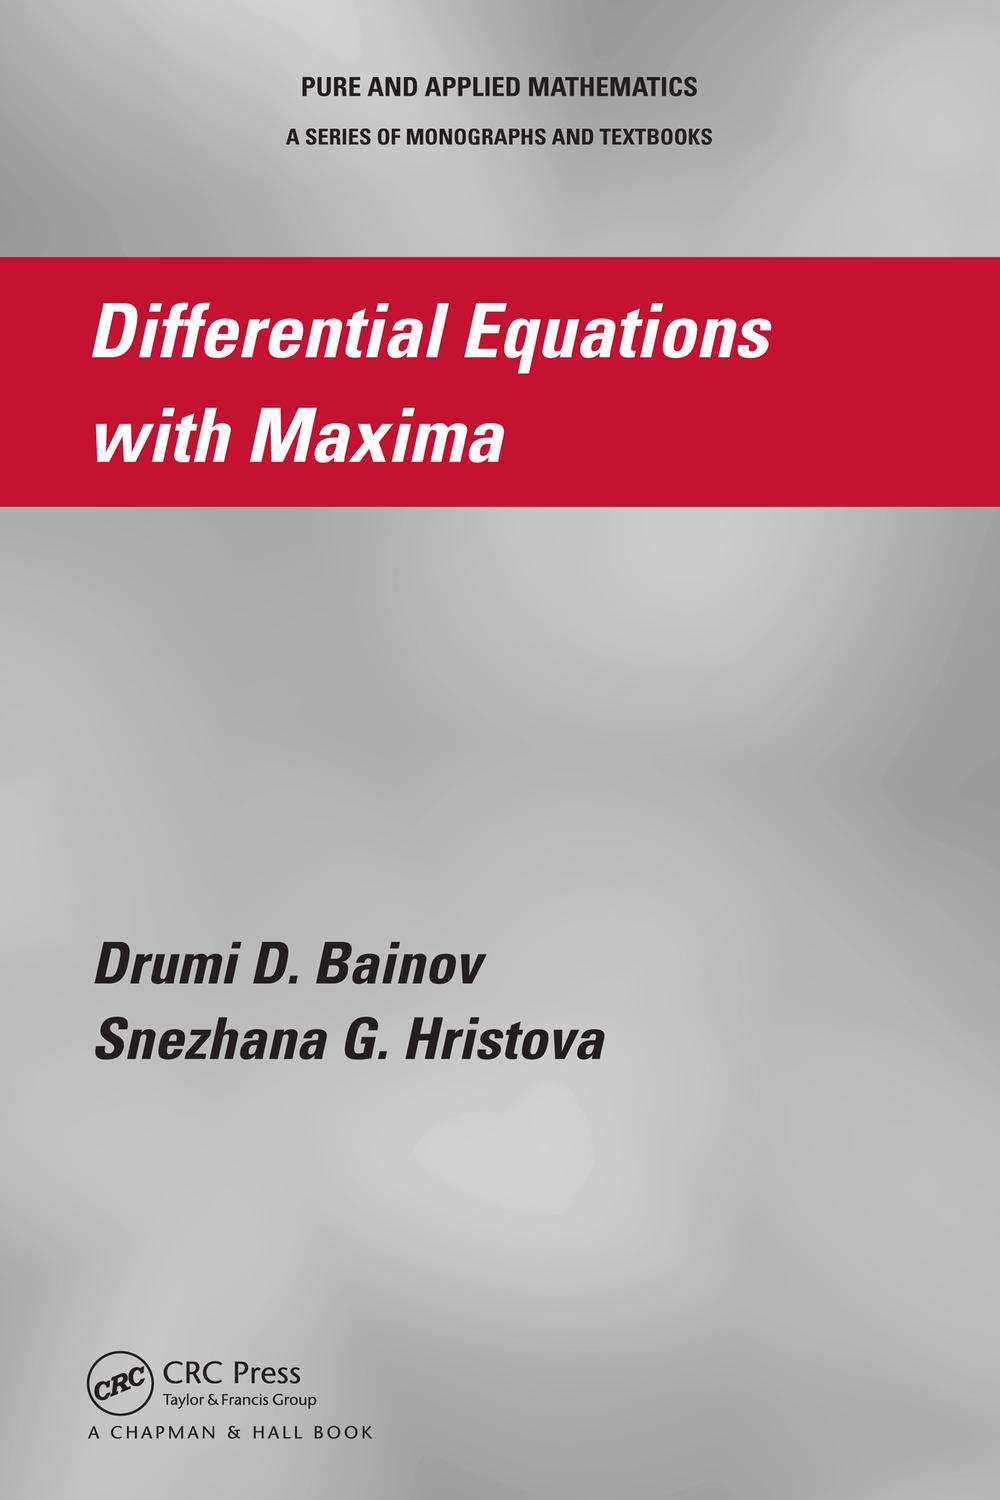 Differential Equations with Maxima - Drumi D. Bainov, Snezhana G. Hristova